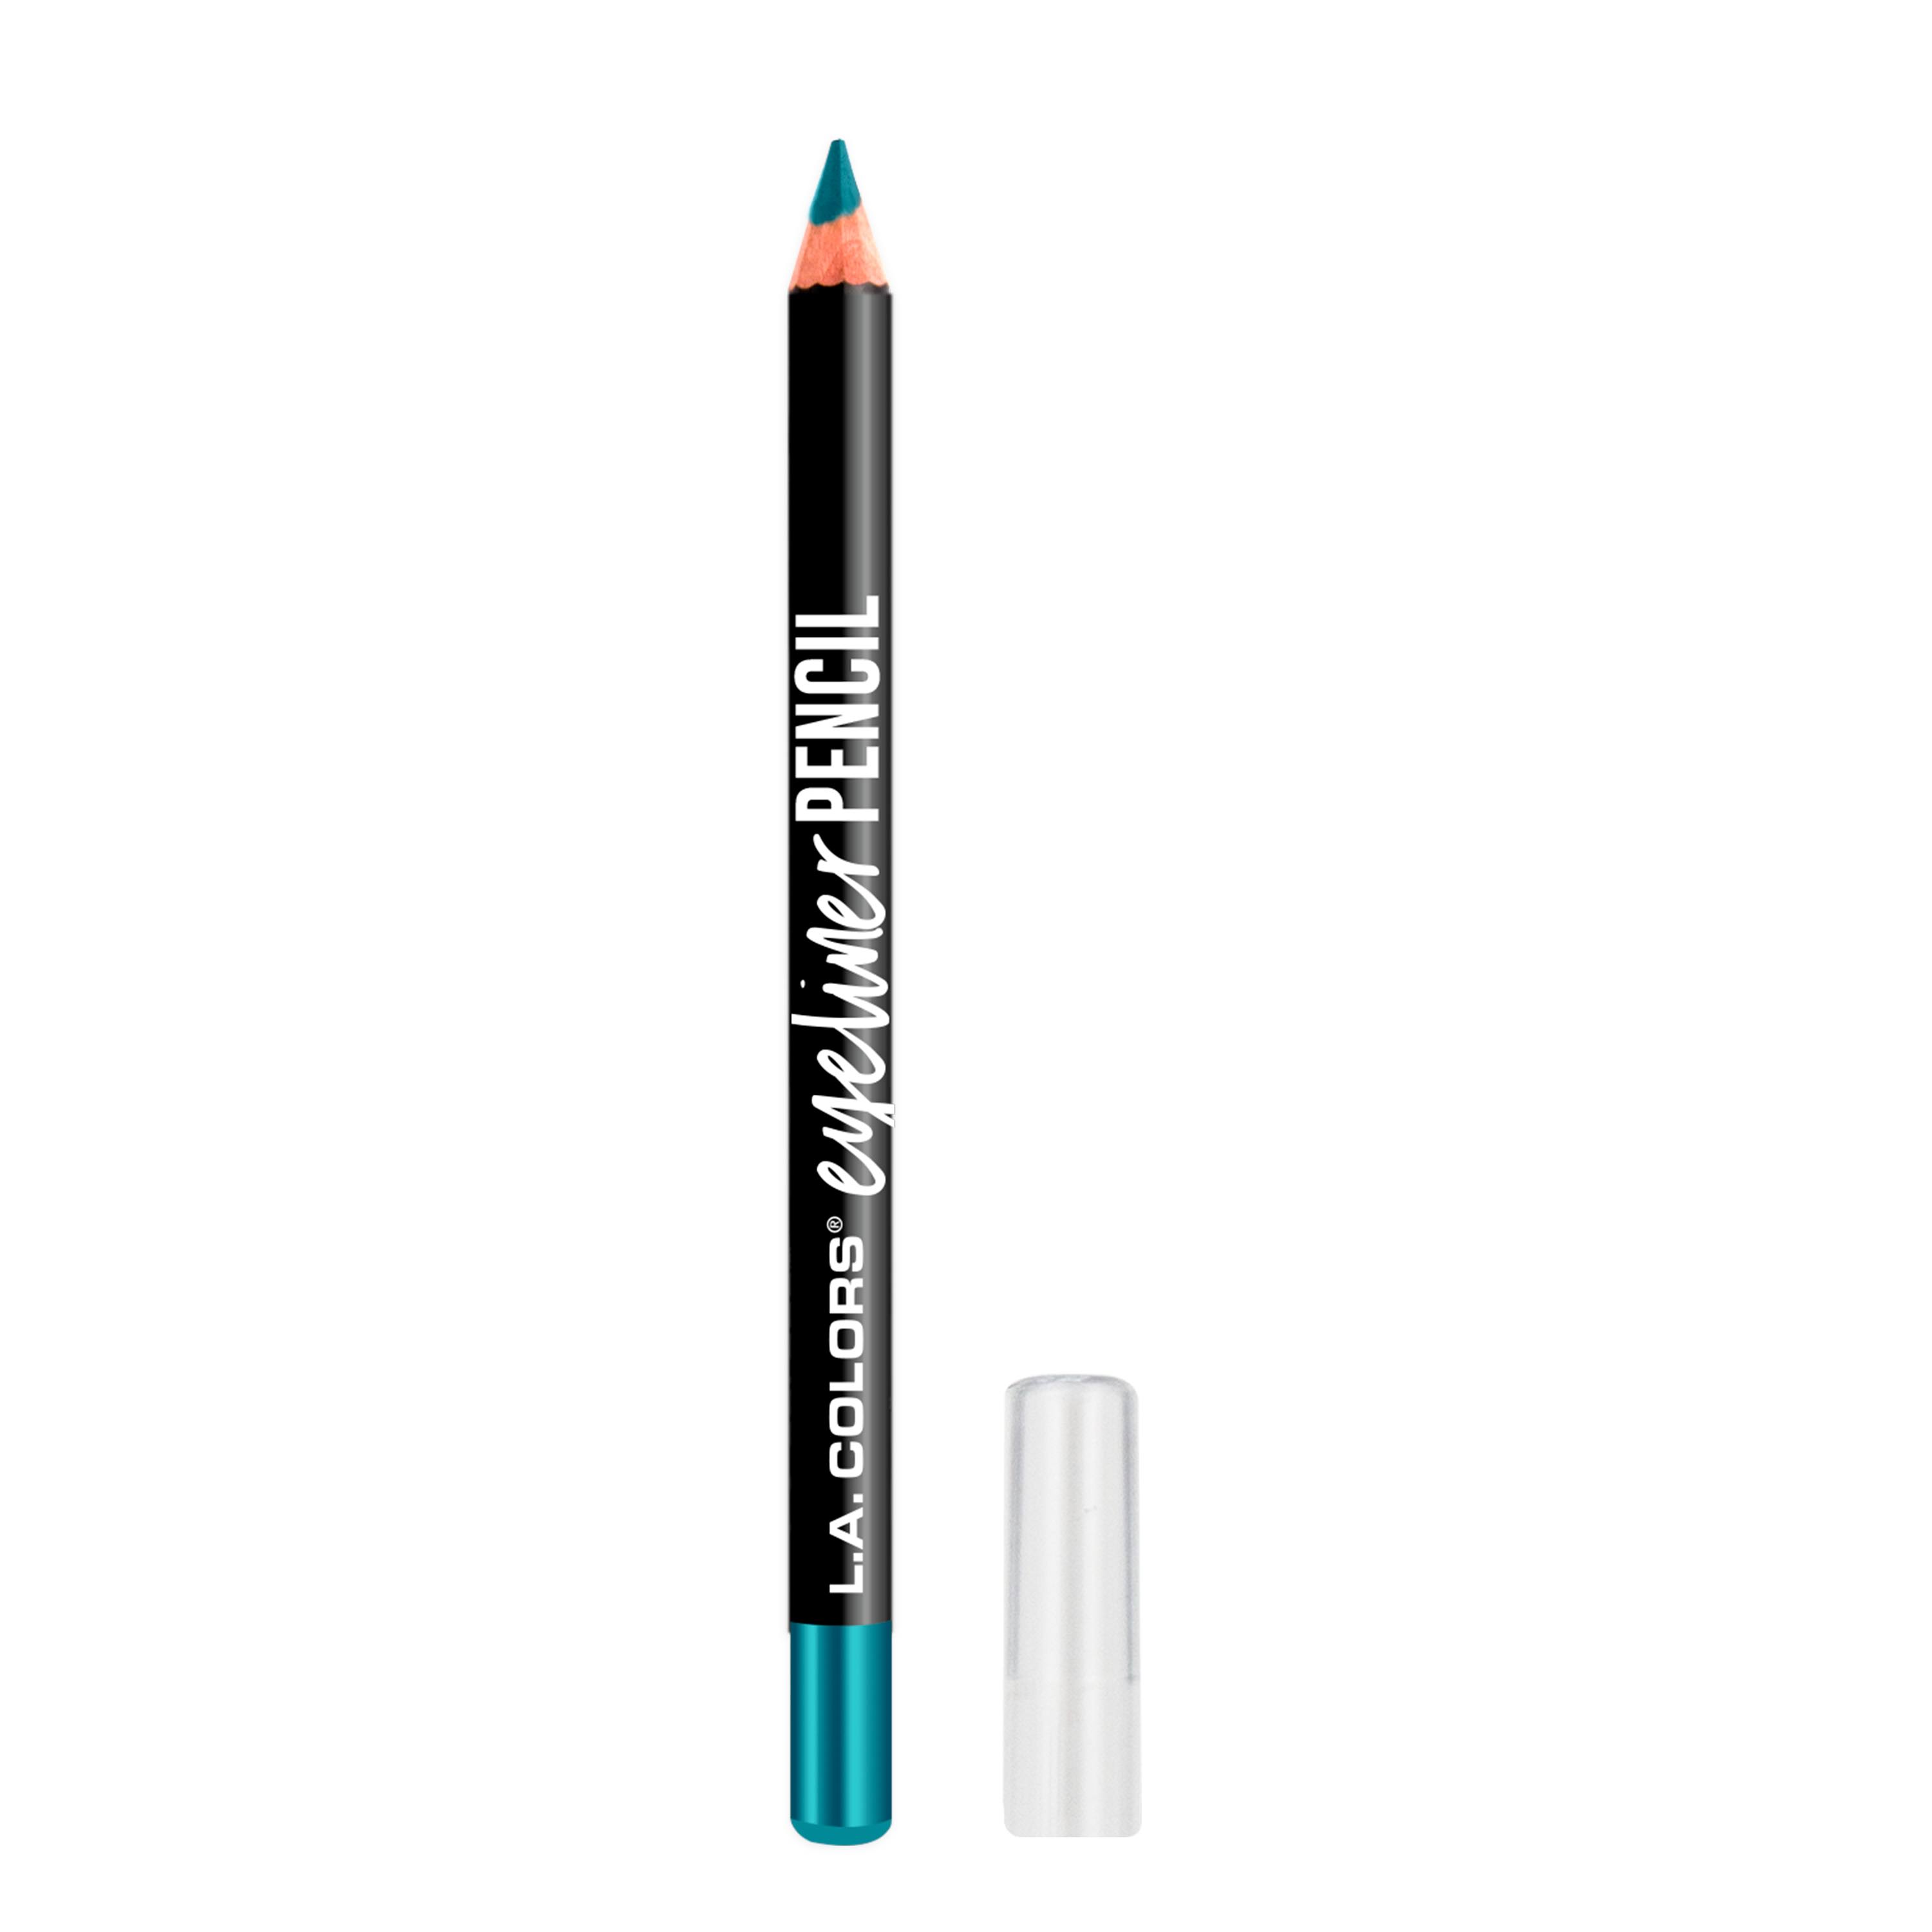 L A Colors Eyeliner Pencil - Turquoise, 0.035oz